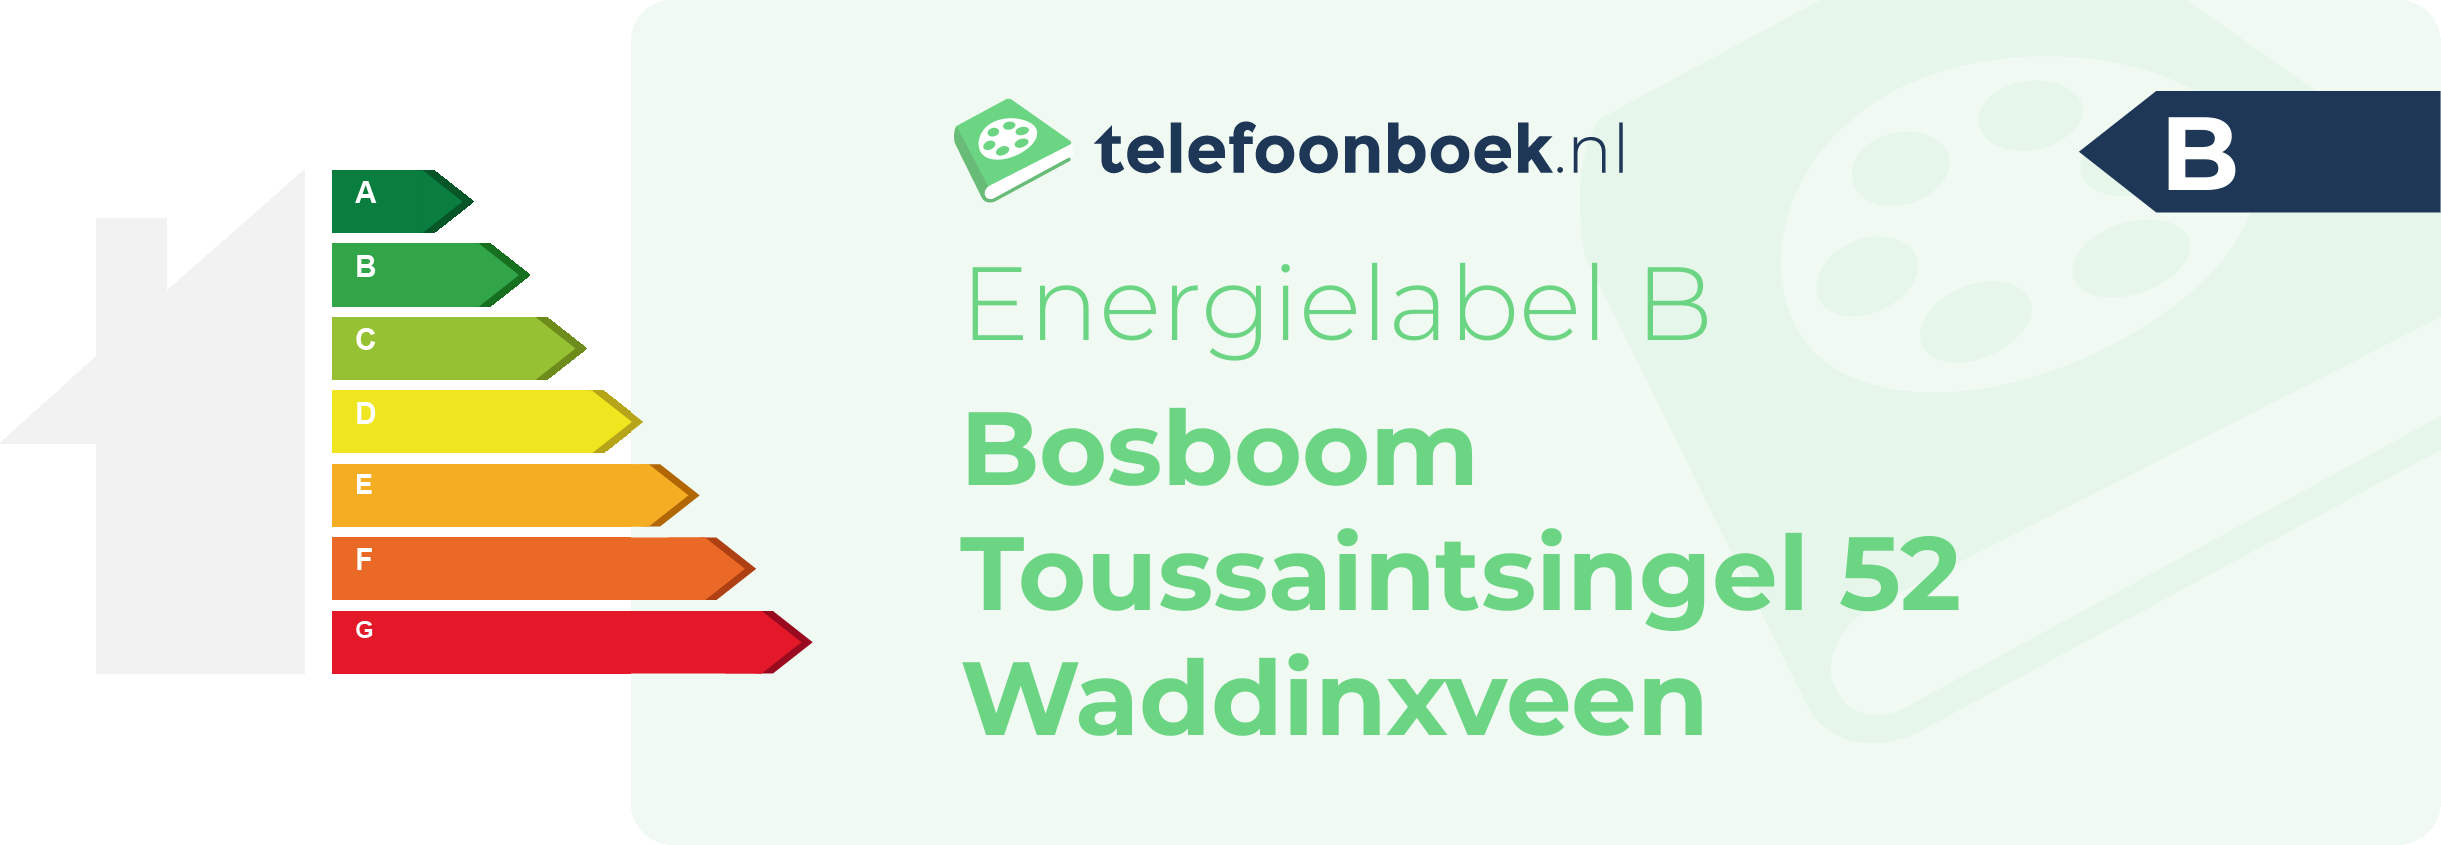 Energielabel Bosboom Toussaintsingel 52 Waddinxveen